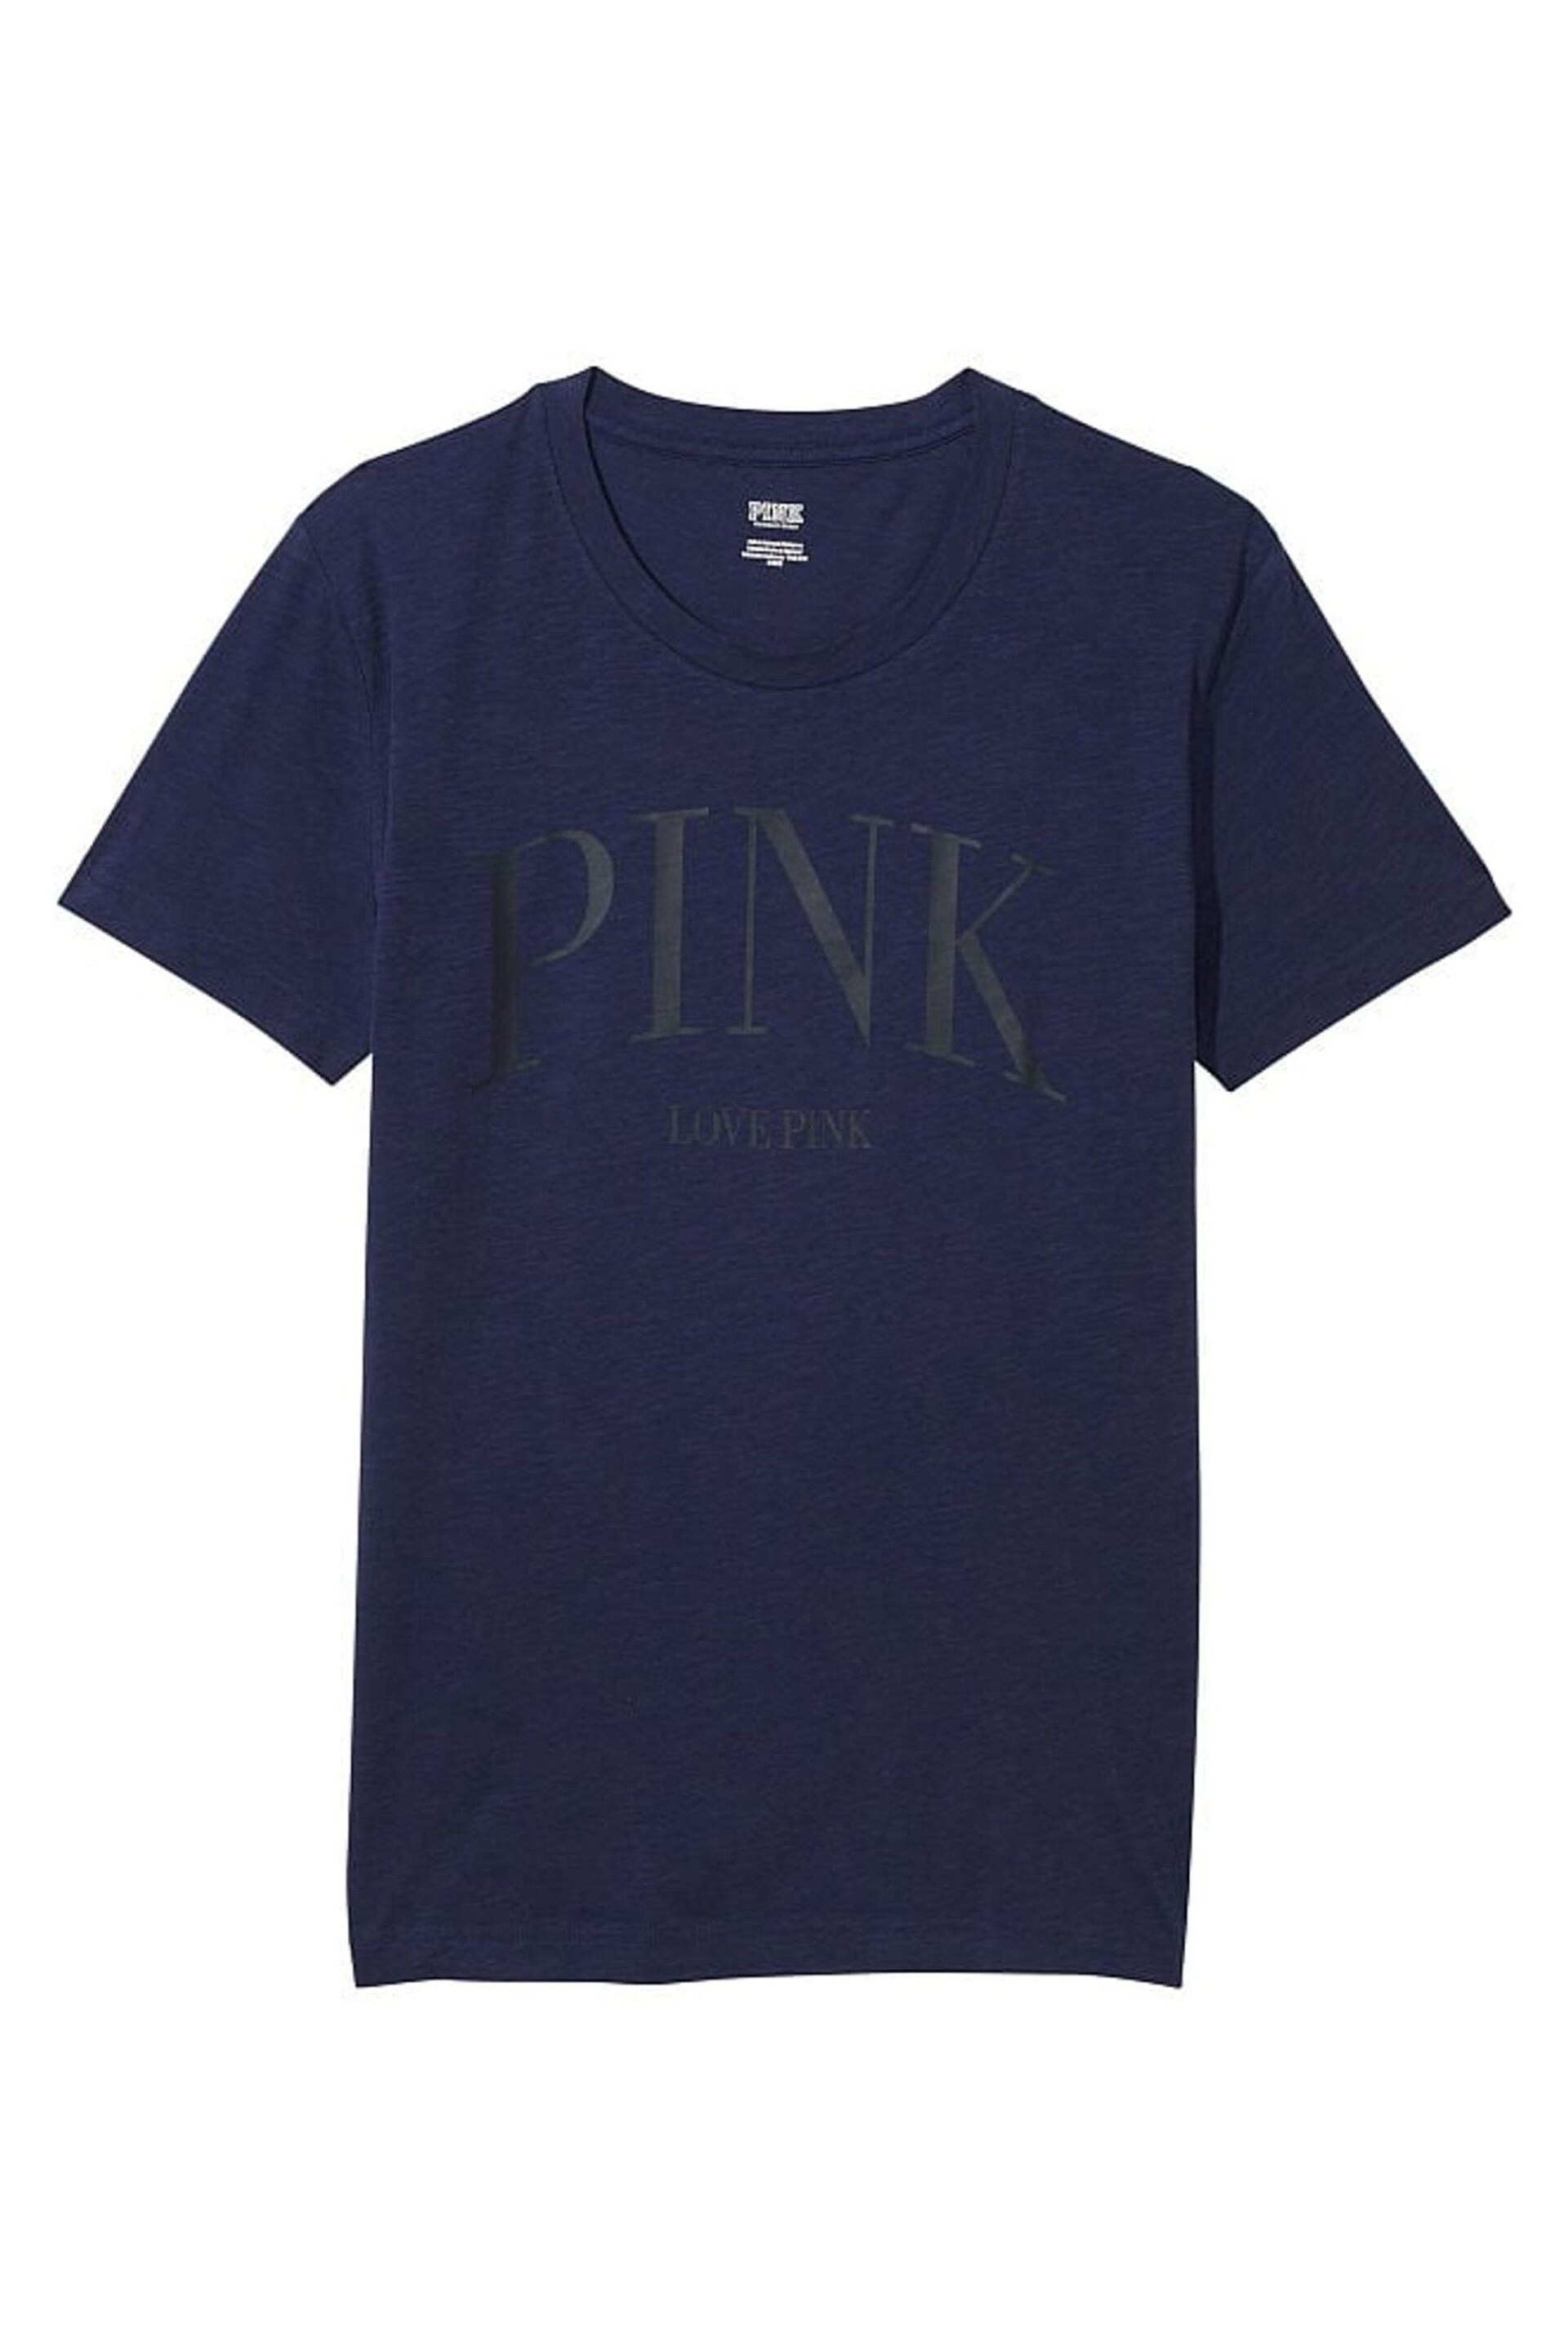 Victoria's Secret PINK Midnight Navy Blue Short Sleeve Slub T-Shirt - Image 4 of 4